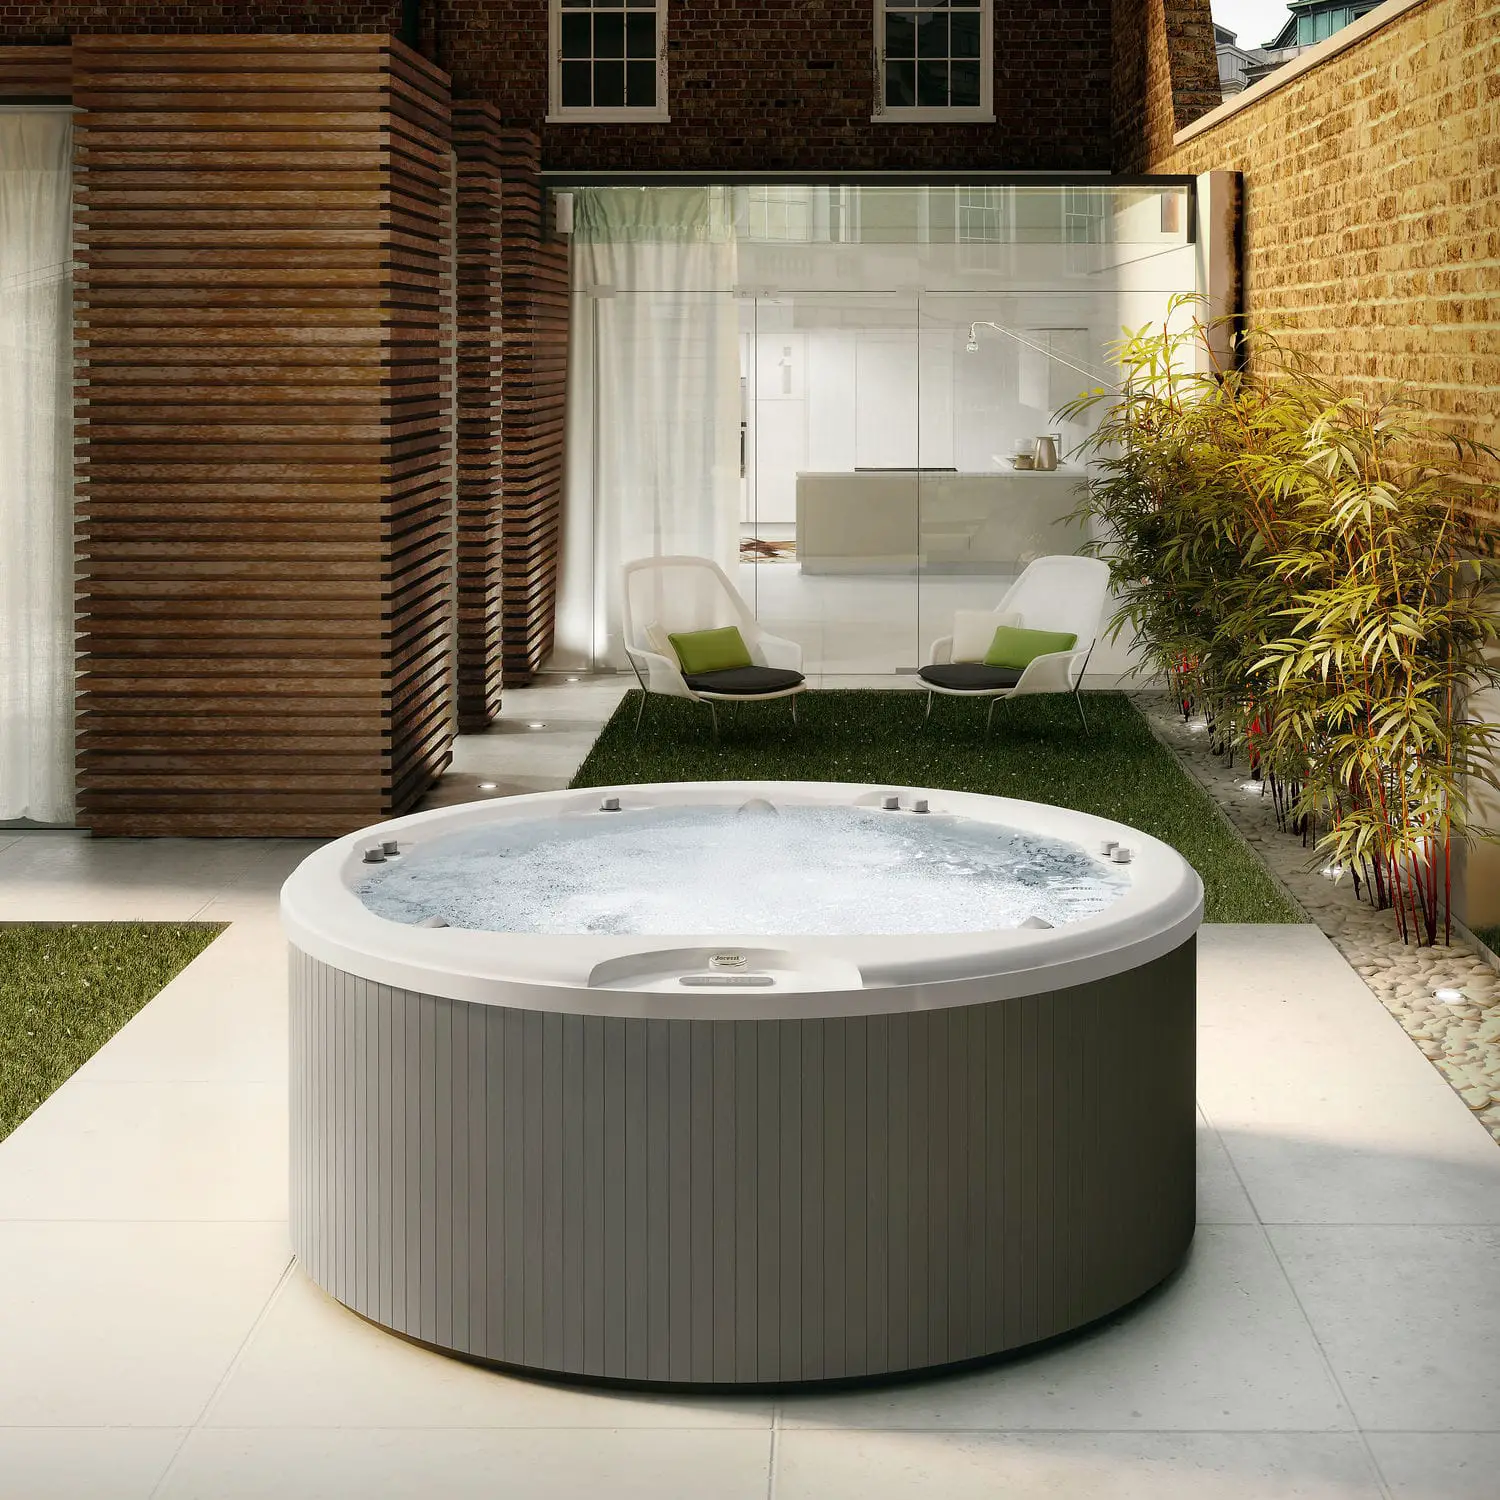 Above Ground Hot Tub Style Ideas  Rickyhil Outdoor Ideas